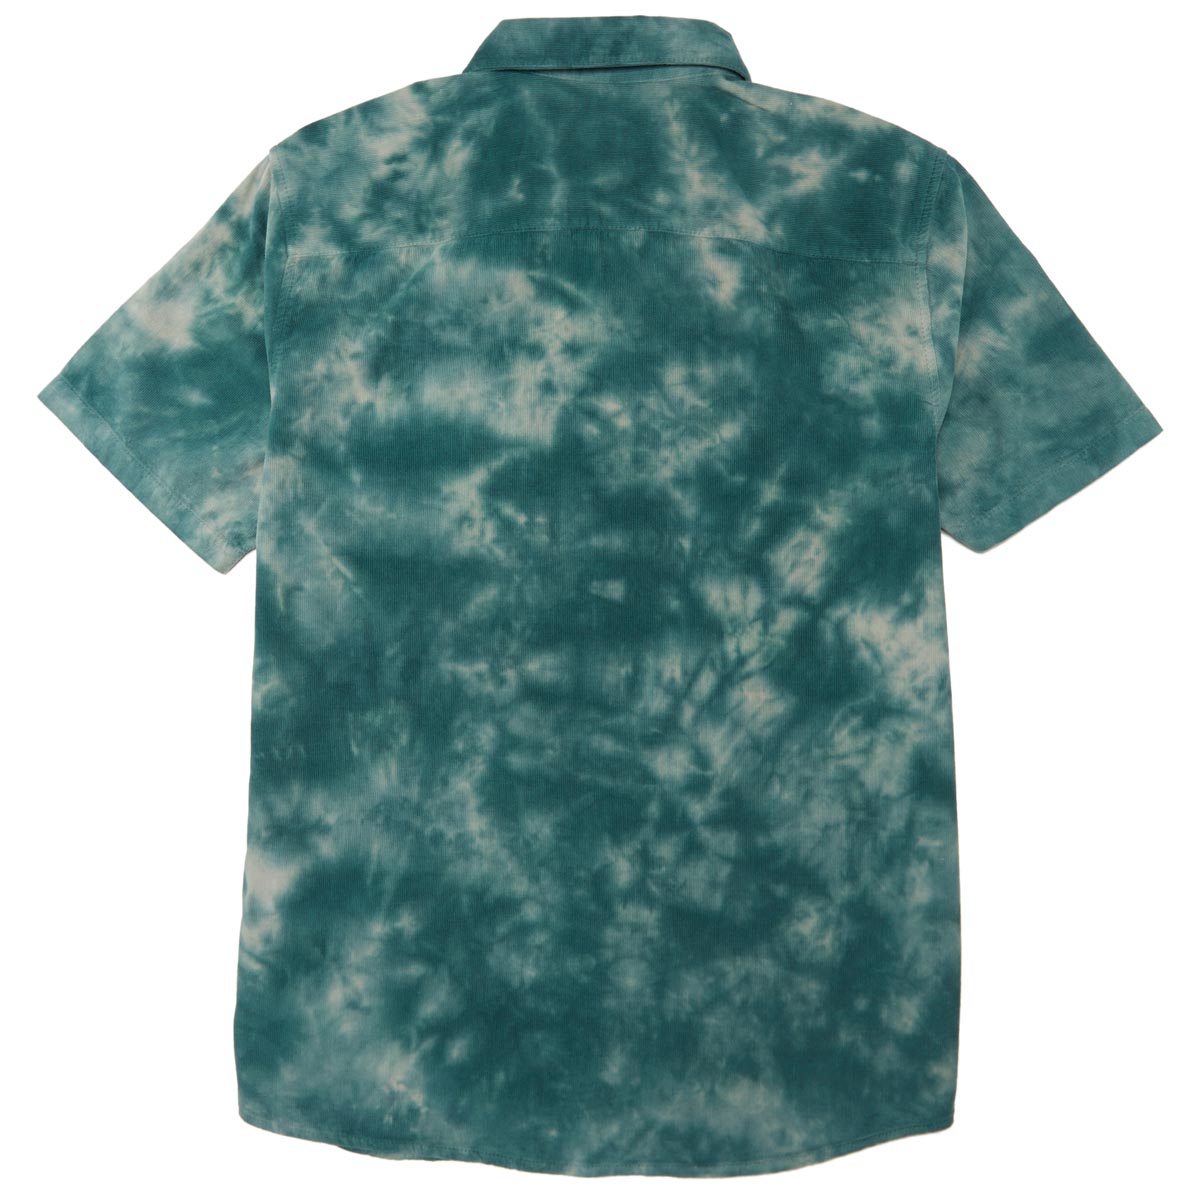 RVCA Bleach Cord Shirt - Emerald Green image 2